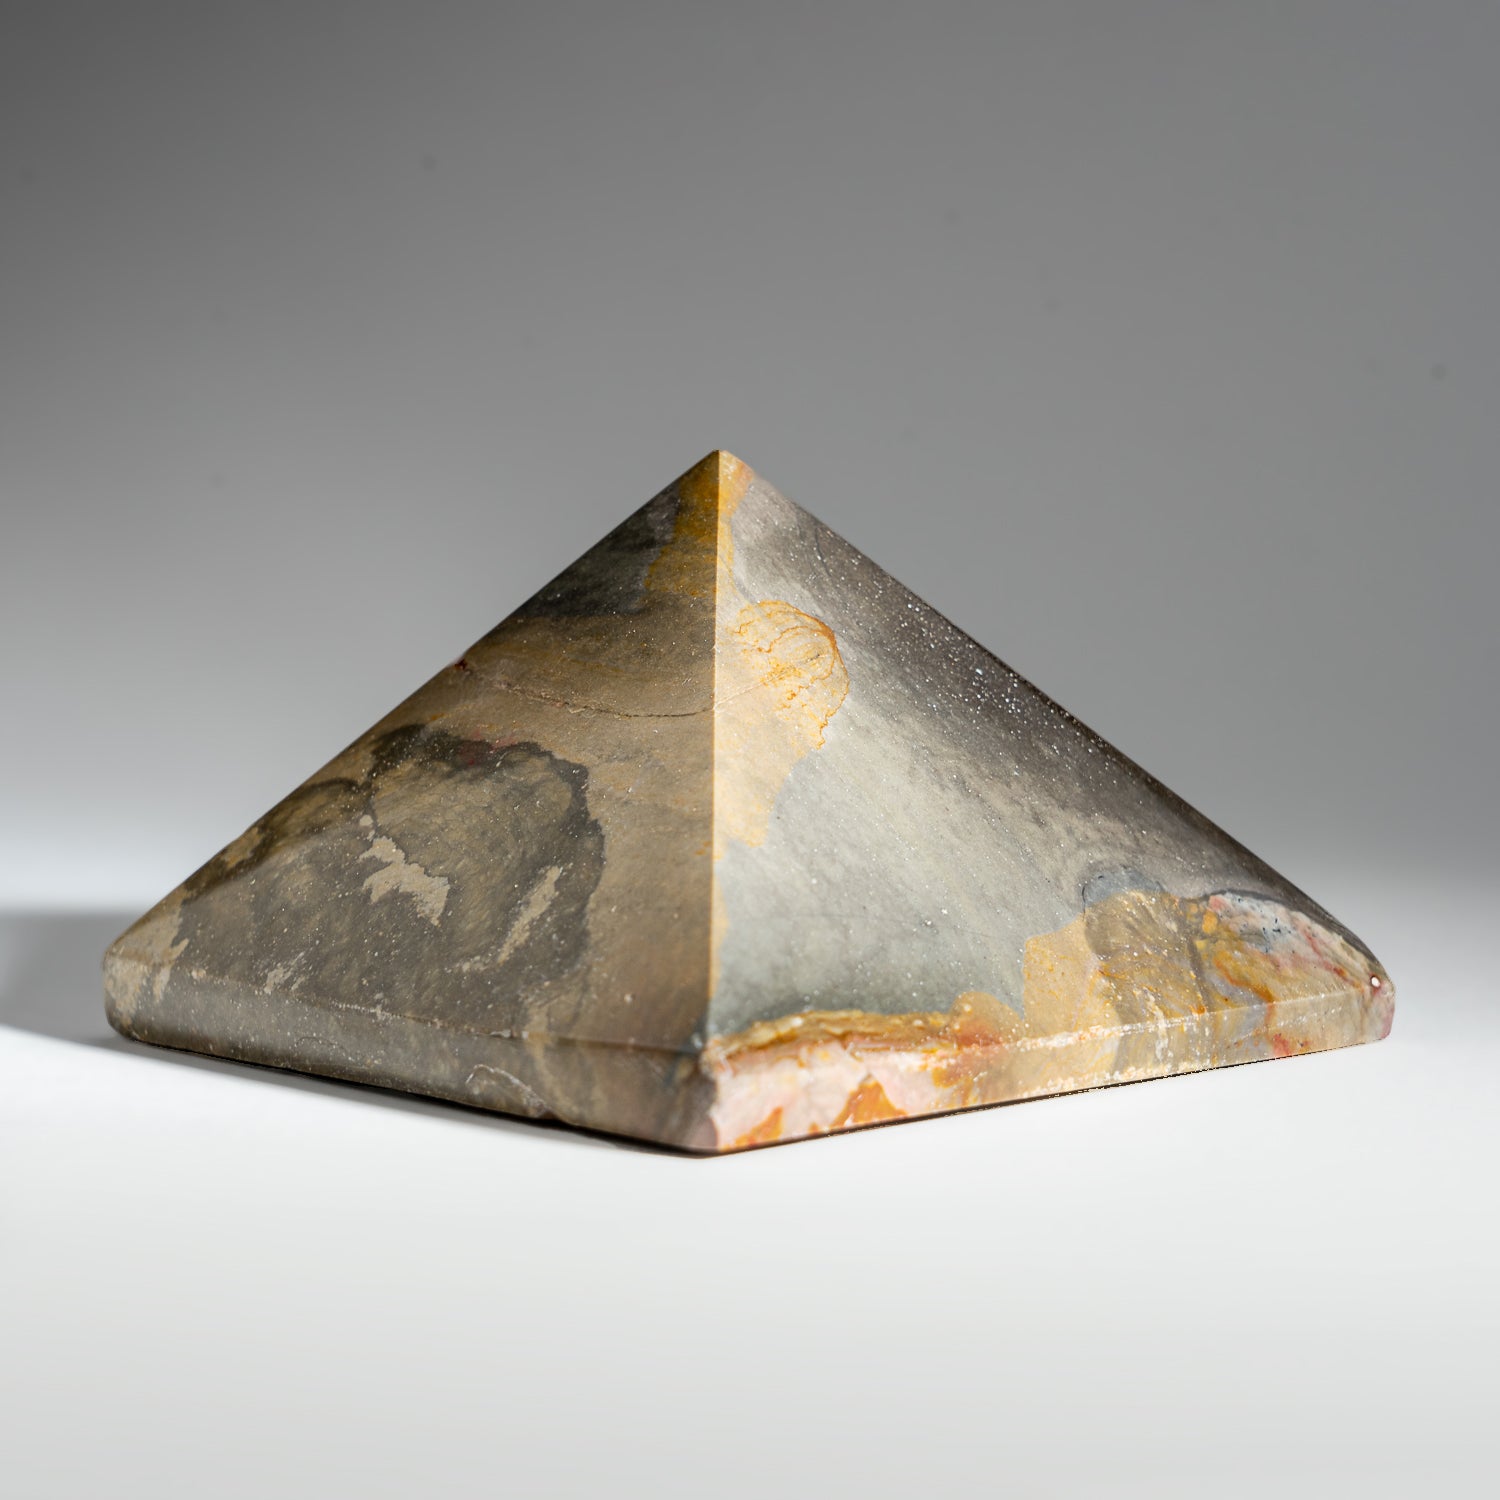 Polished Polychrome Pyramid from Madagascar (1.2 lbs)